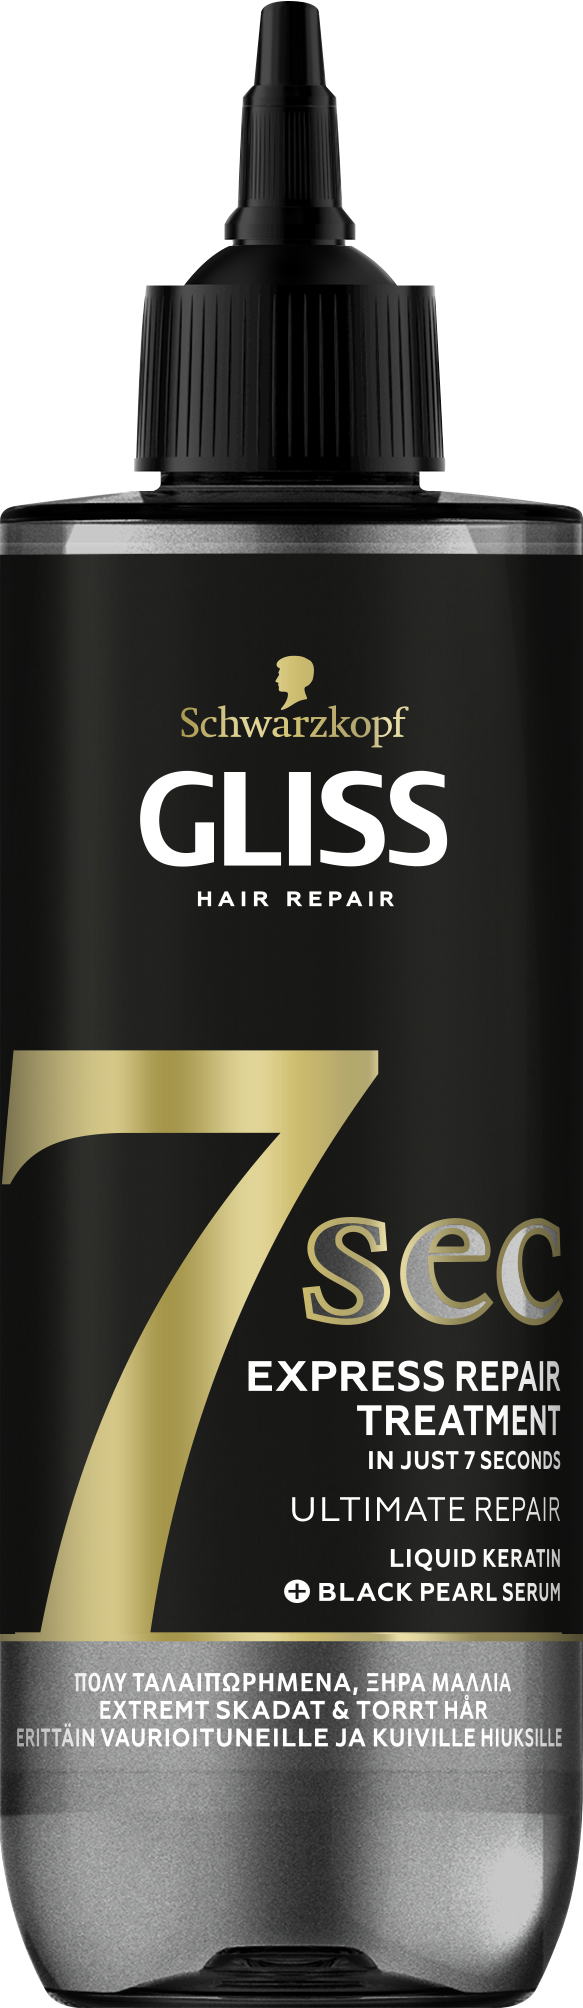 Schwarzkopf Gliss Hair Repair Liquid Silk Intensive Shine Mask Review